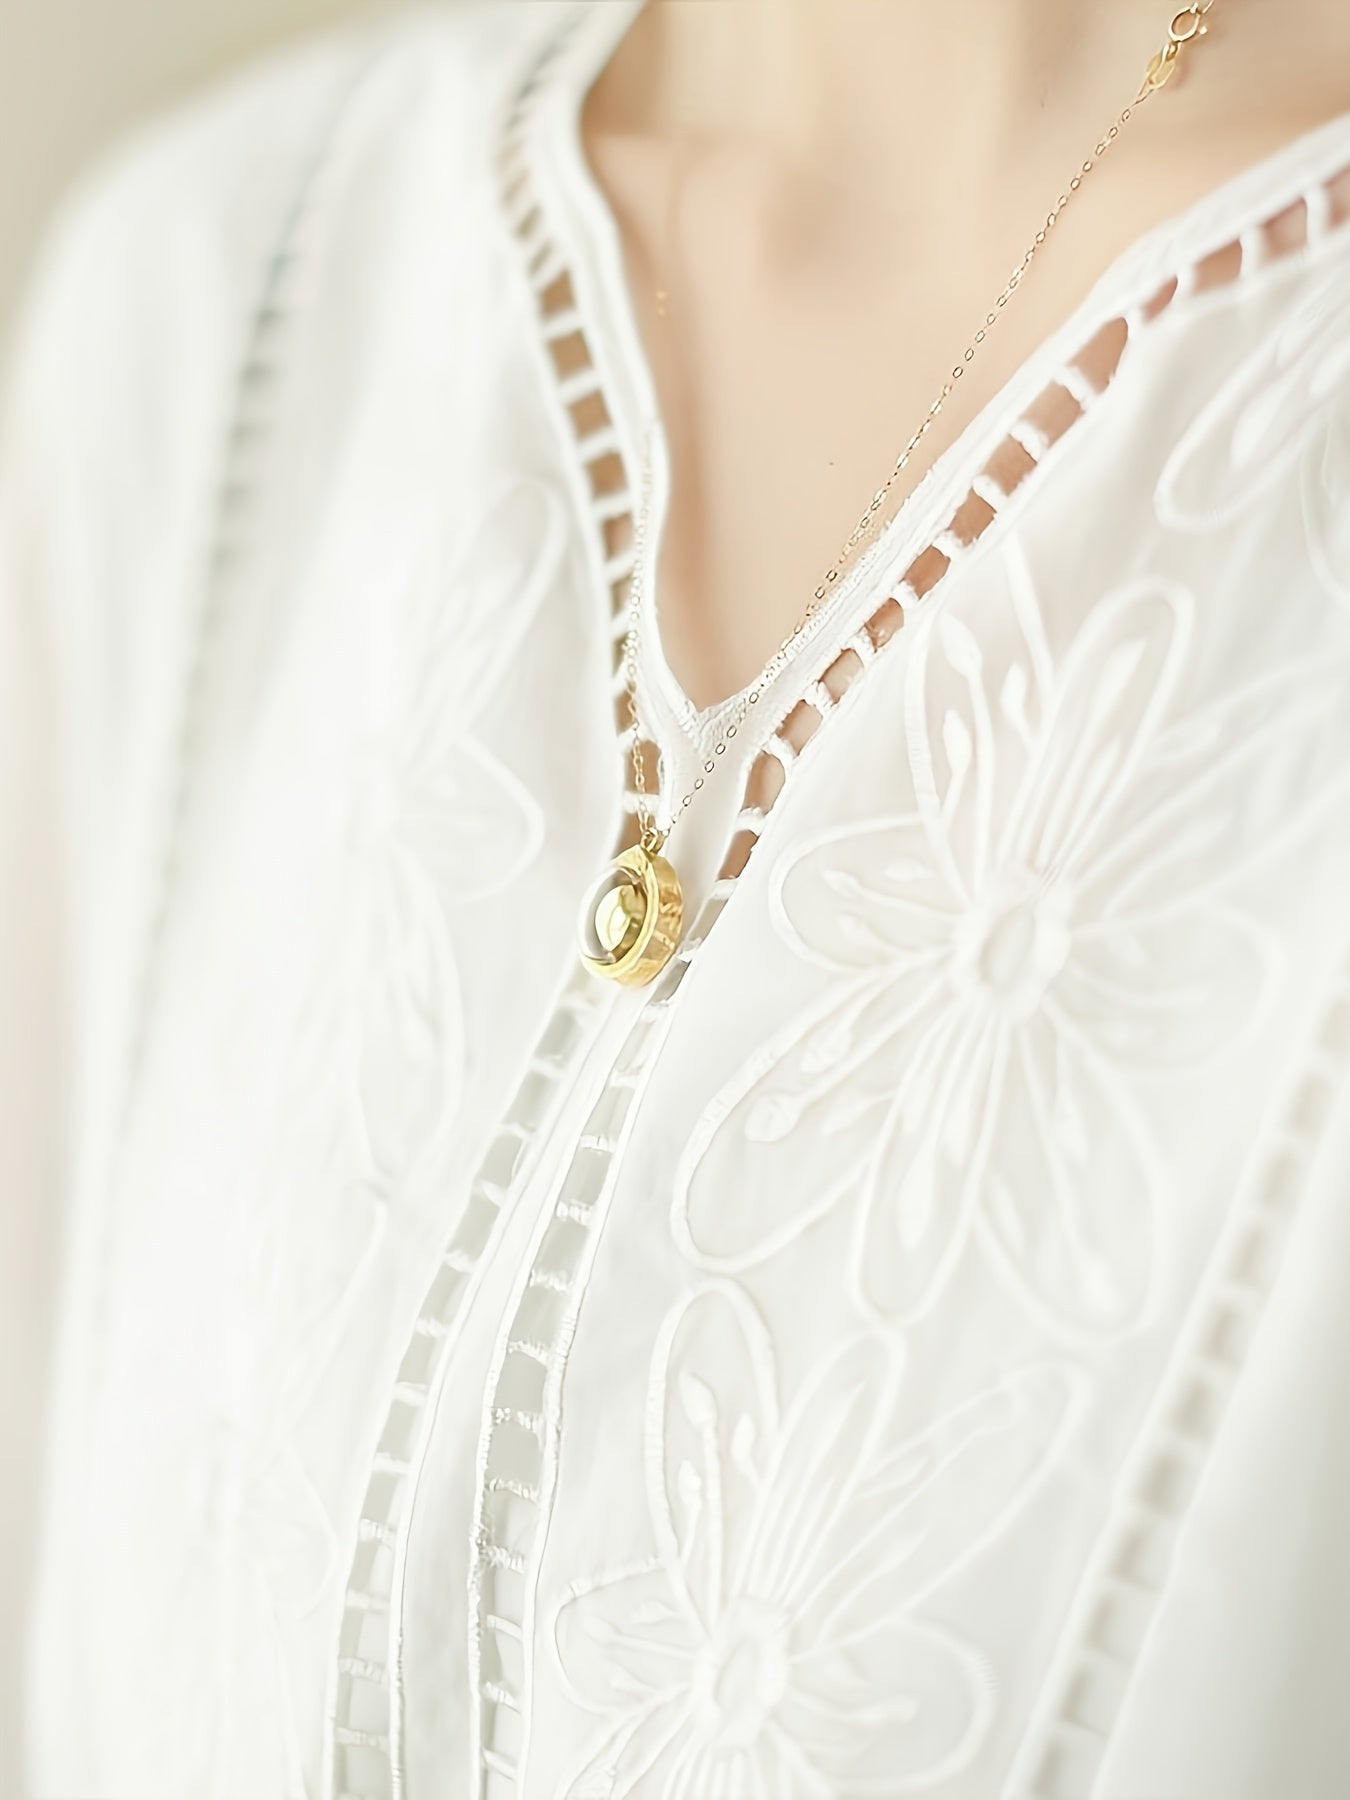 White Cotton Embroidered Drawstring Long Sleeve Dress, Elegant Cotton Dress For Spring & Fall, Women's White Cotton Dress